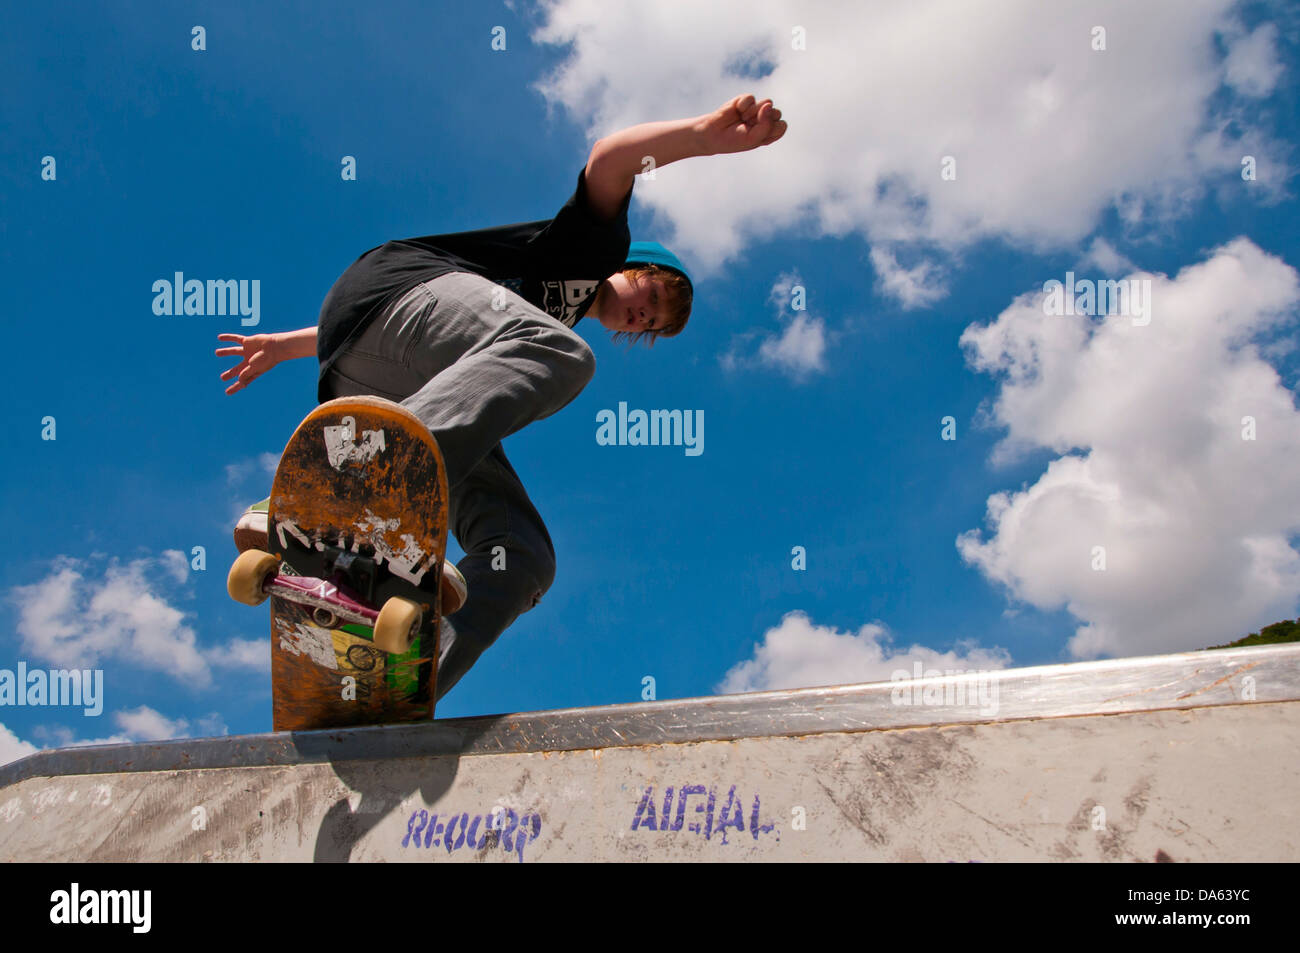 12 ans, patineur, garçon, skateboard, skateboard, boardslide sol, Blaubeuren, Jura souabe, Baden-Wurttemberg, Germany, Europe Banque D'Images